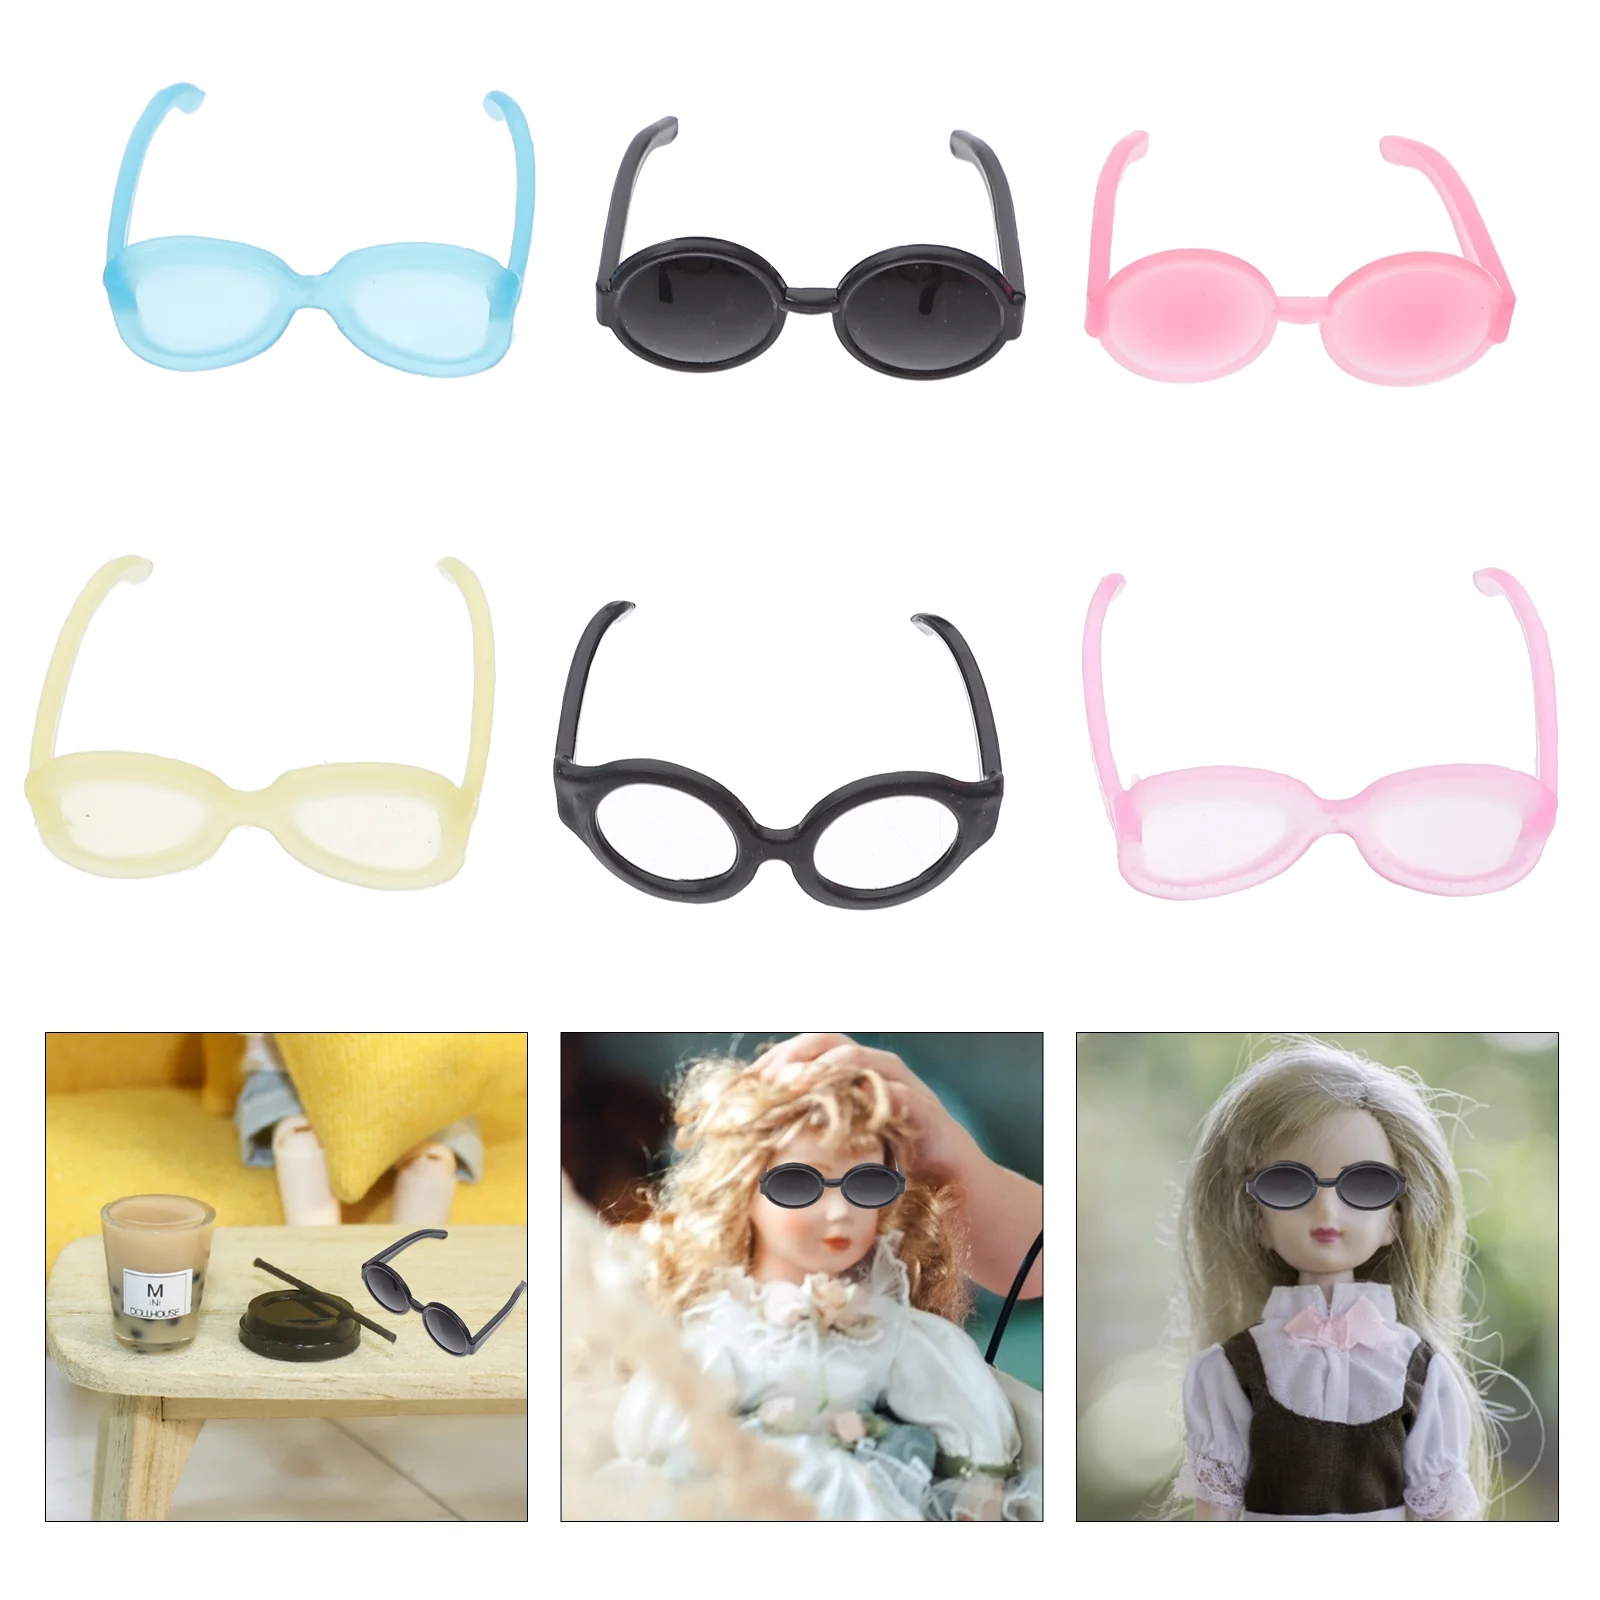 

Glasses Sunglassesminieyeglasses Accessories Inch Dressing Crafts Miniatureplastic Baby Toy Play Tiny Costume Dog Dressprops Pet